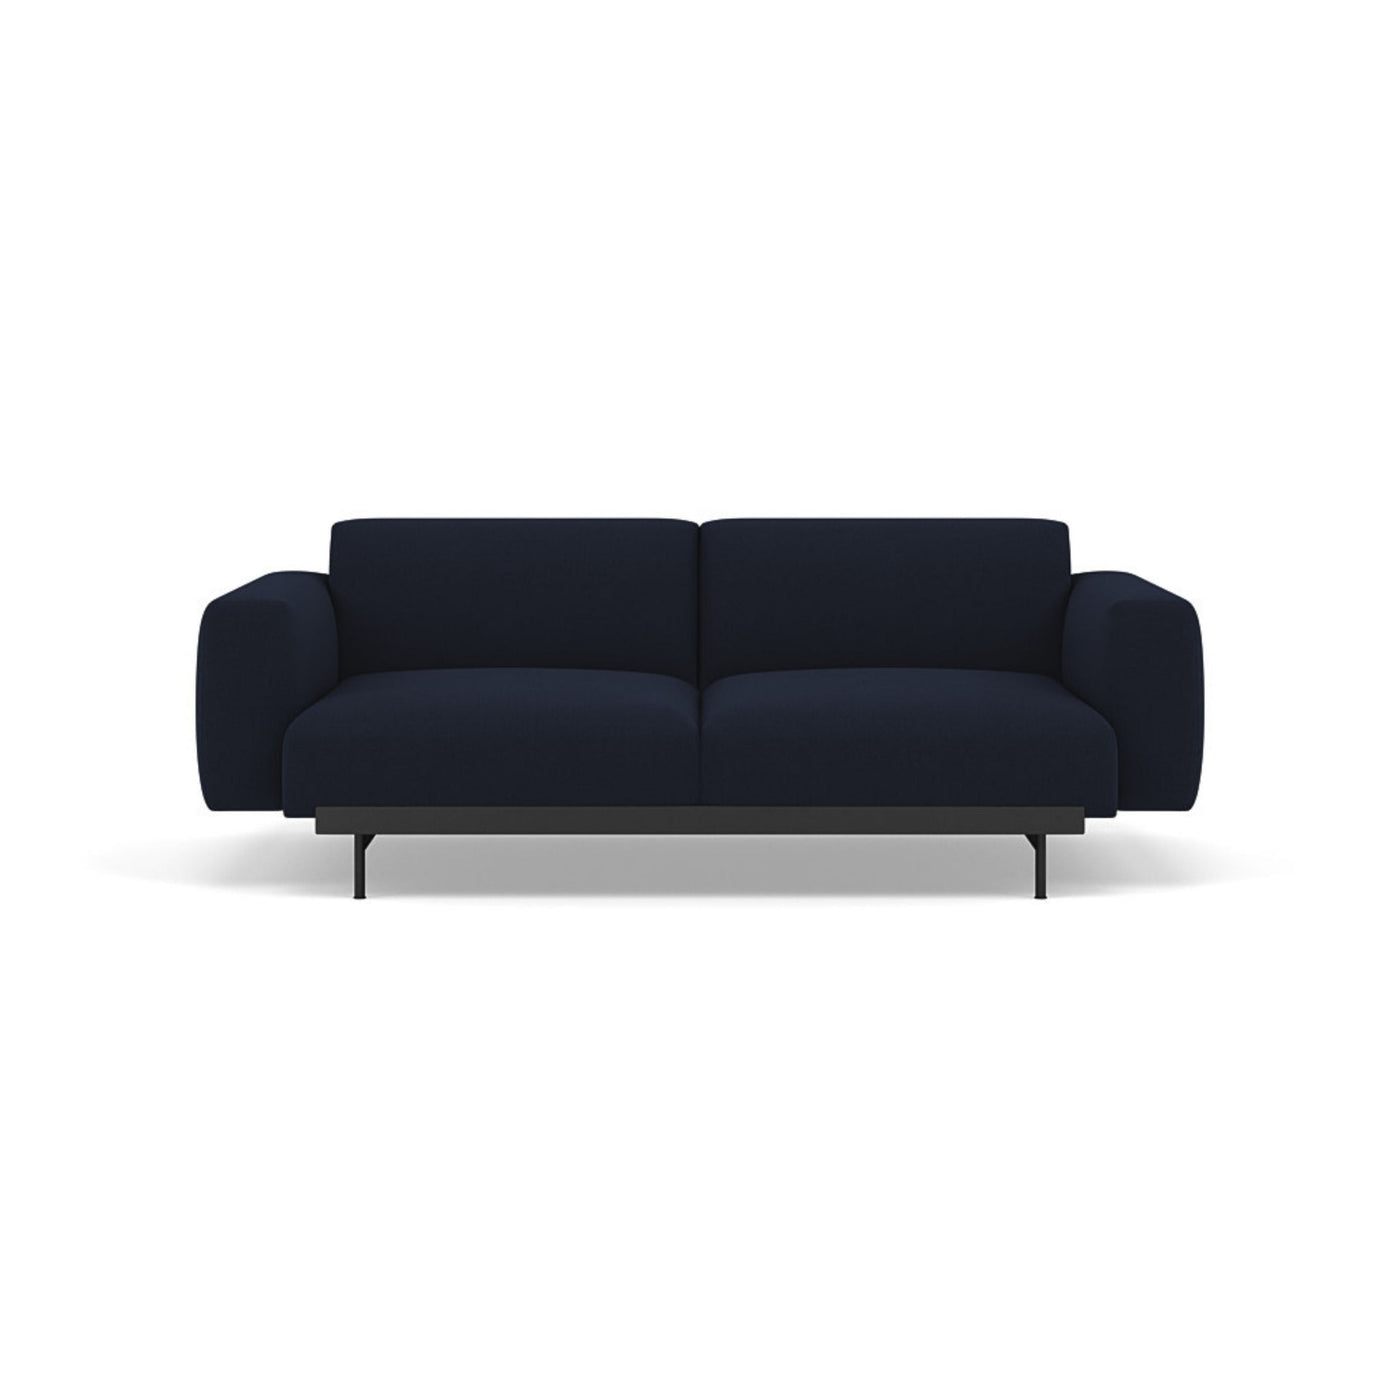 Muuto In Situ Modular 2 Seater Sofa, configuration 1 in vidar 554 fabric. Made to order from someday designs #colour_vidar-554